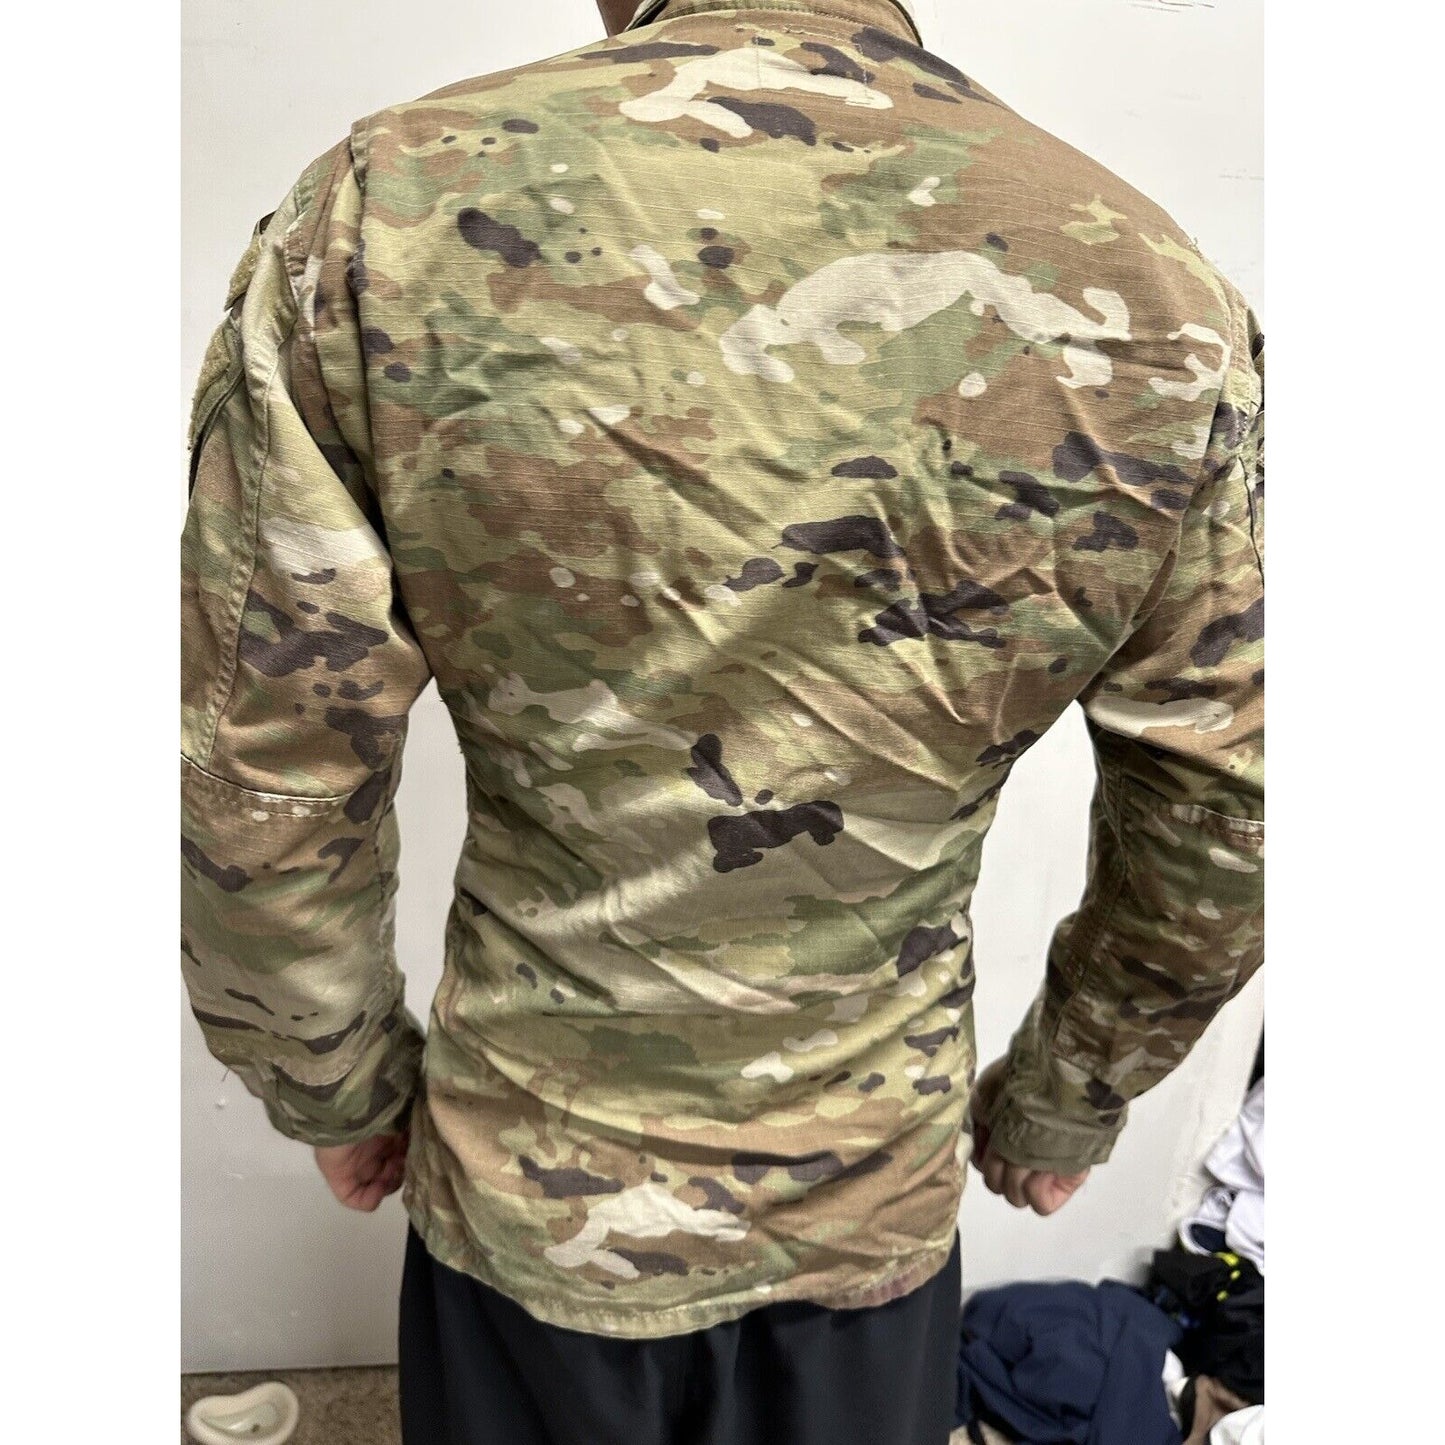 Men’s Ocp Top Blouse Uniform Army Air Force Combat Uniform X-small Short